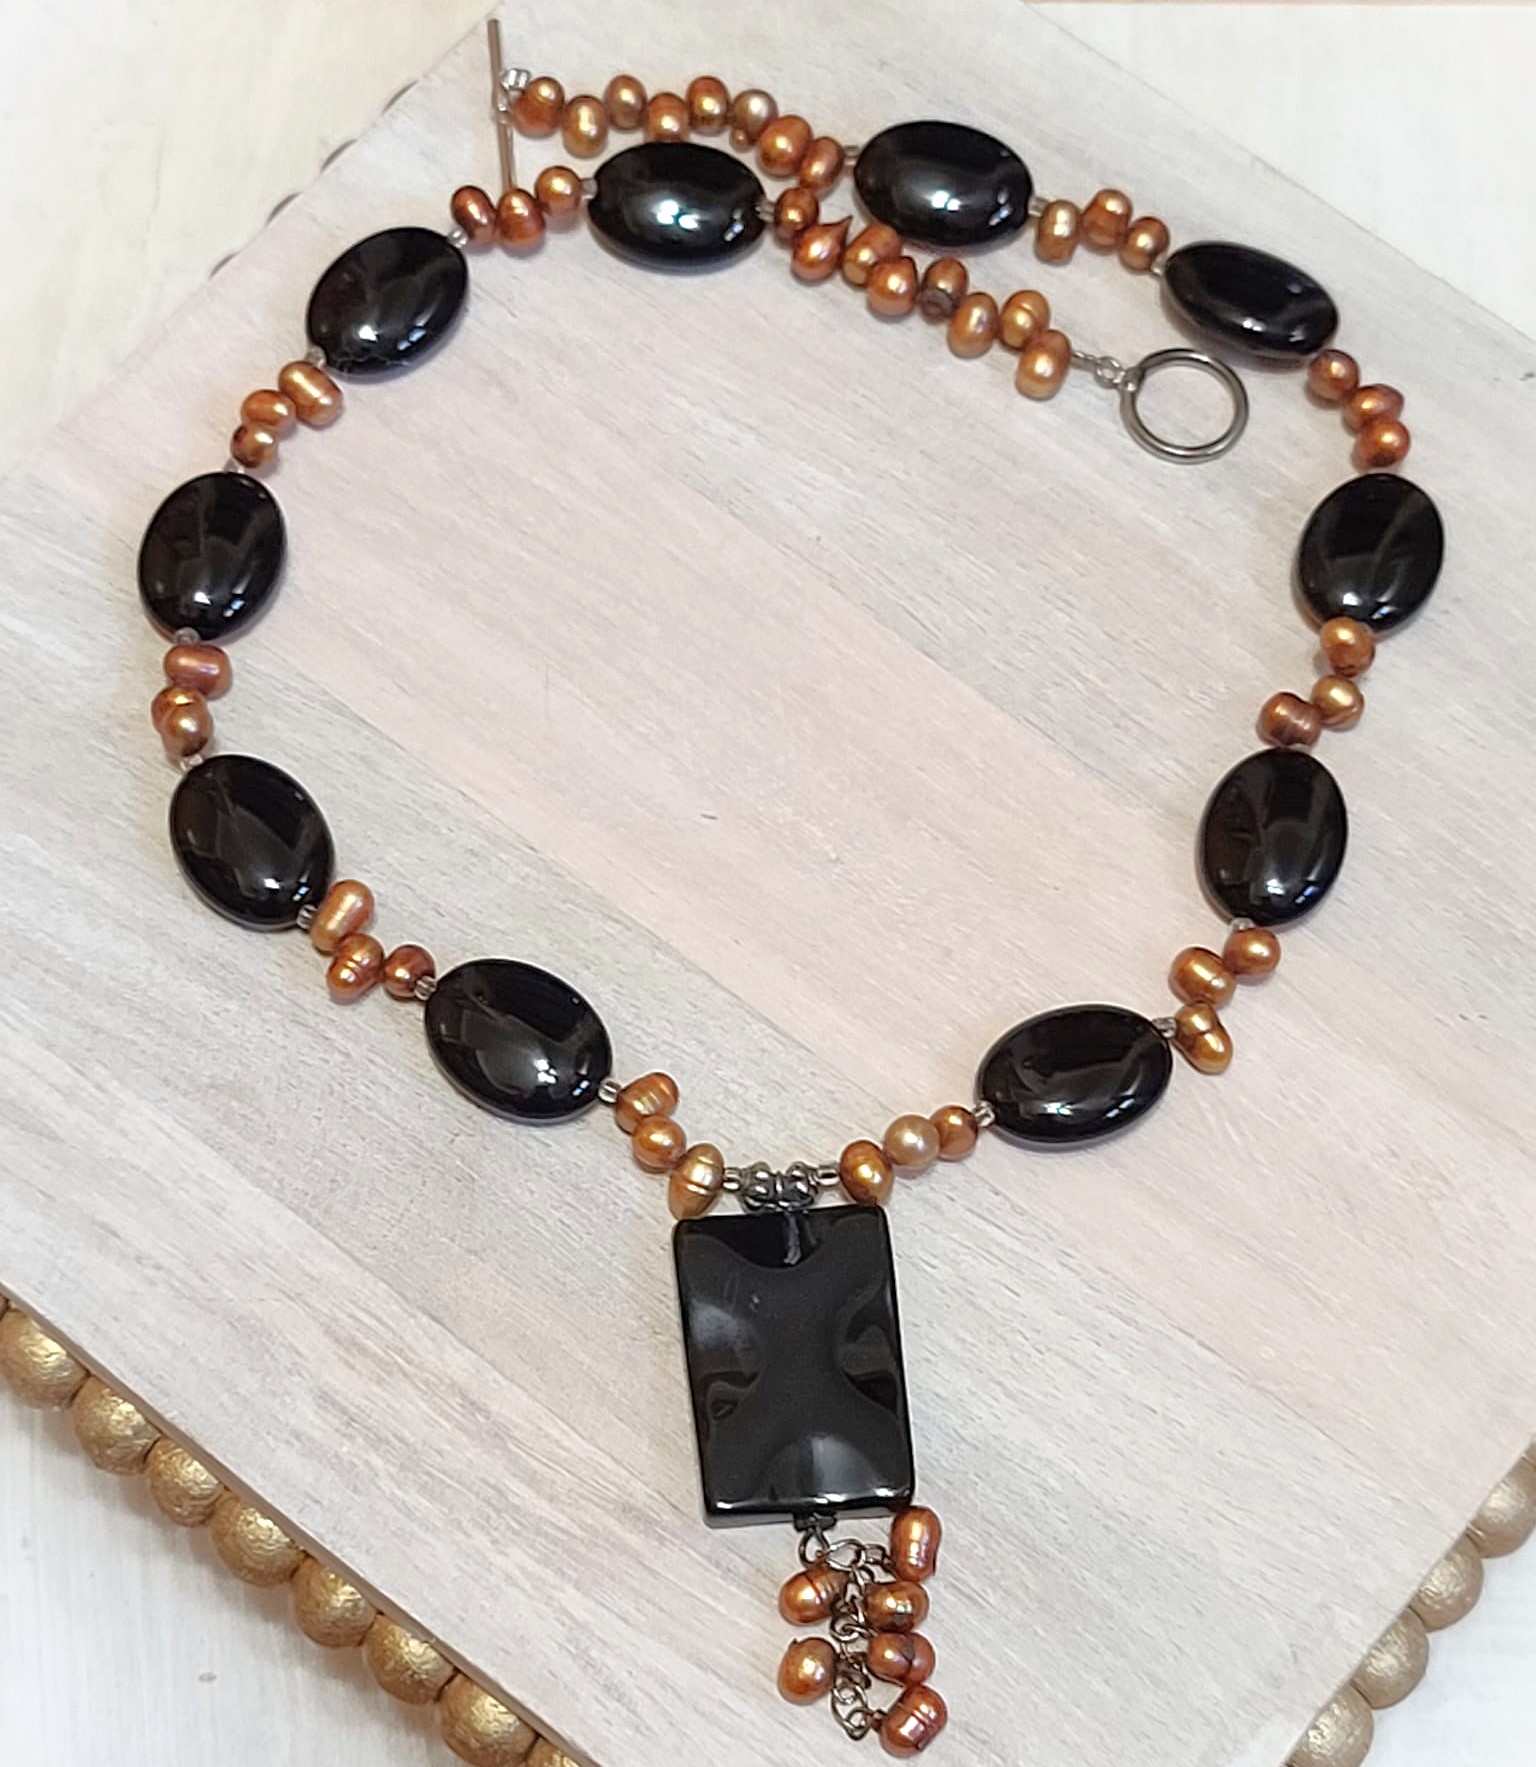 Black onyx gemstone and bronze pearls pendant drop necklace